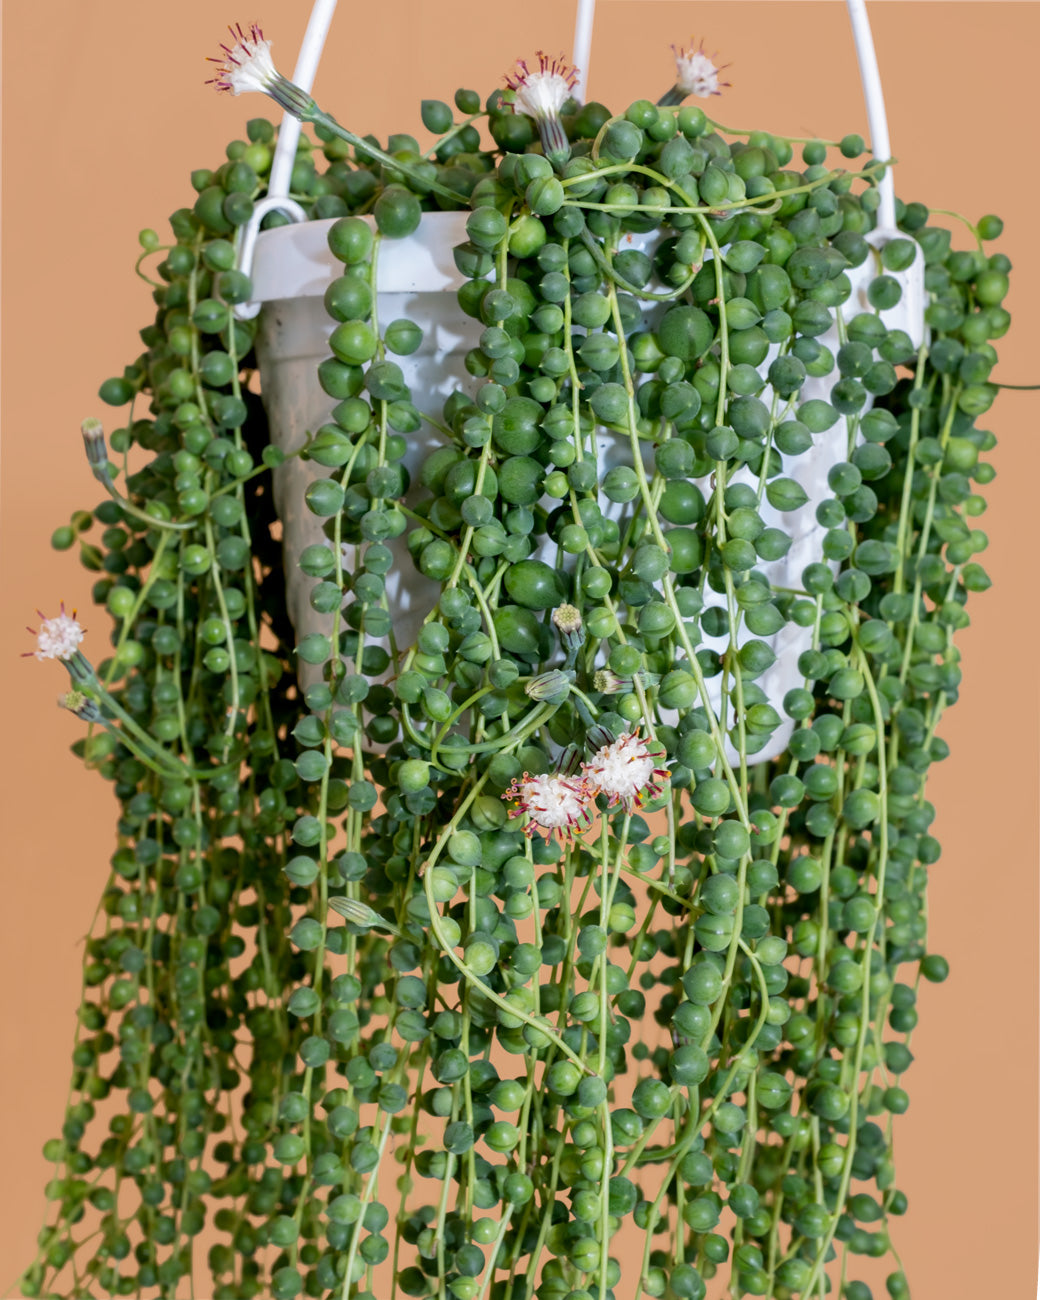 Senecio rowleyanus, or String of Pearls, photographed in a hanging basket at Tula Plants & Design.